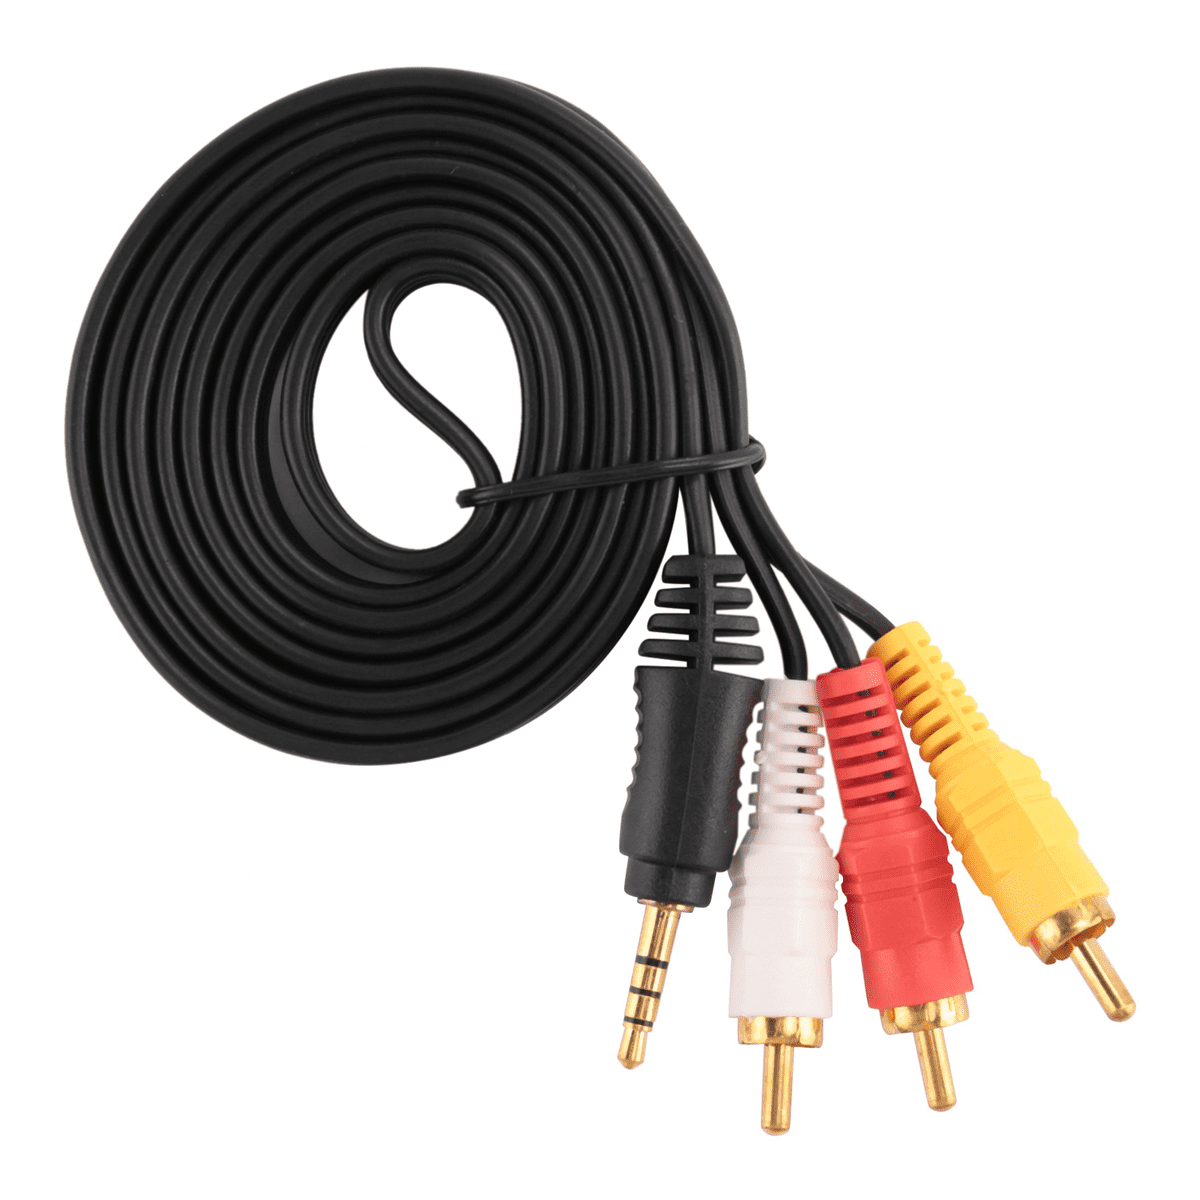 Cable jack 3.5 4 PIN / x3 RCA (Tetrapolar) - 2m > audio/video (conectores/ cables) > video y audio > cable jack > jack